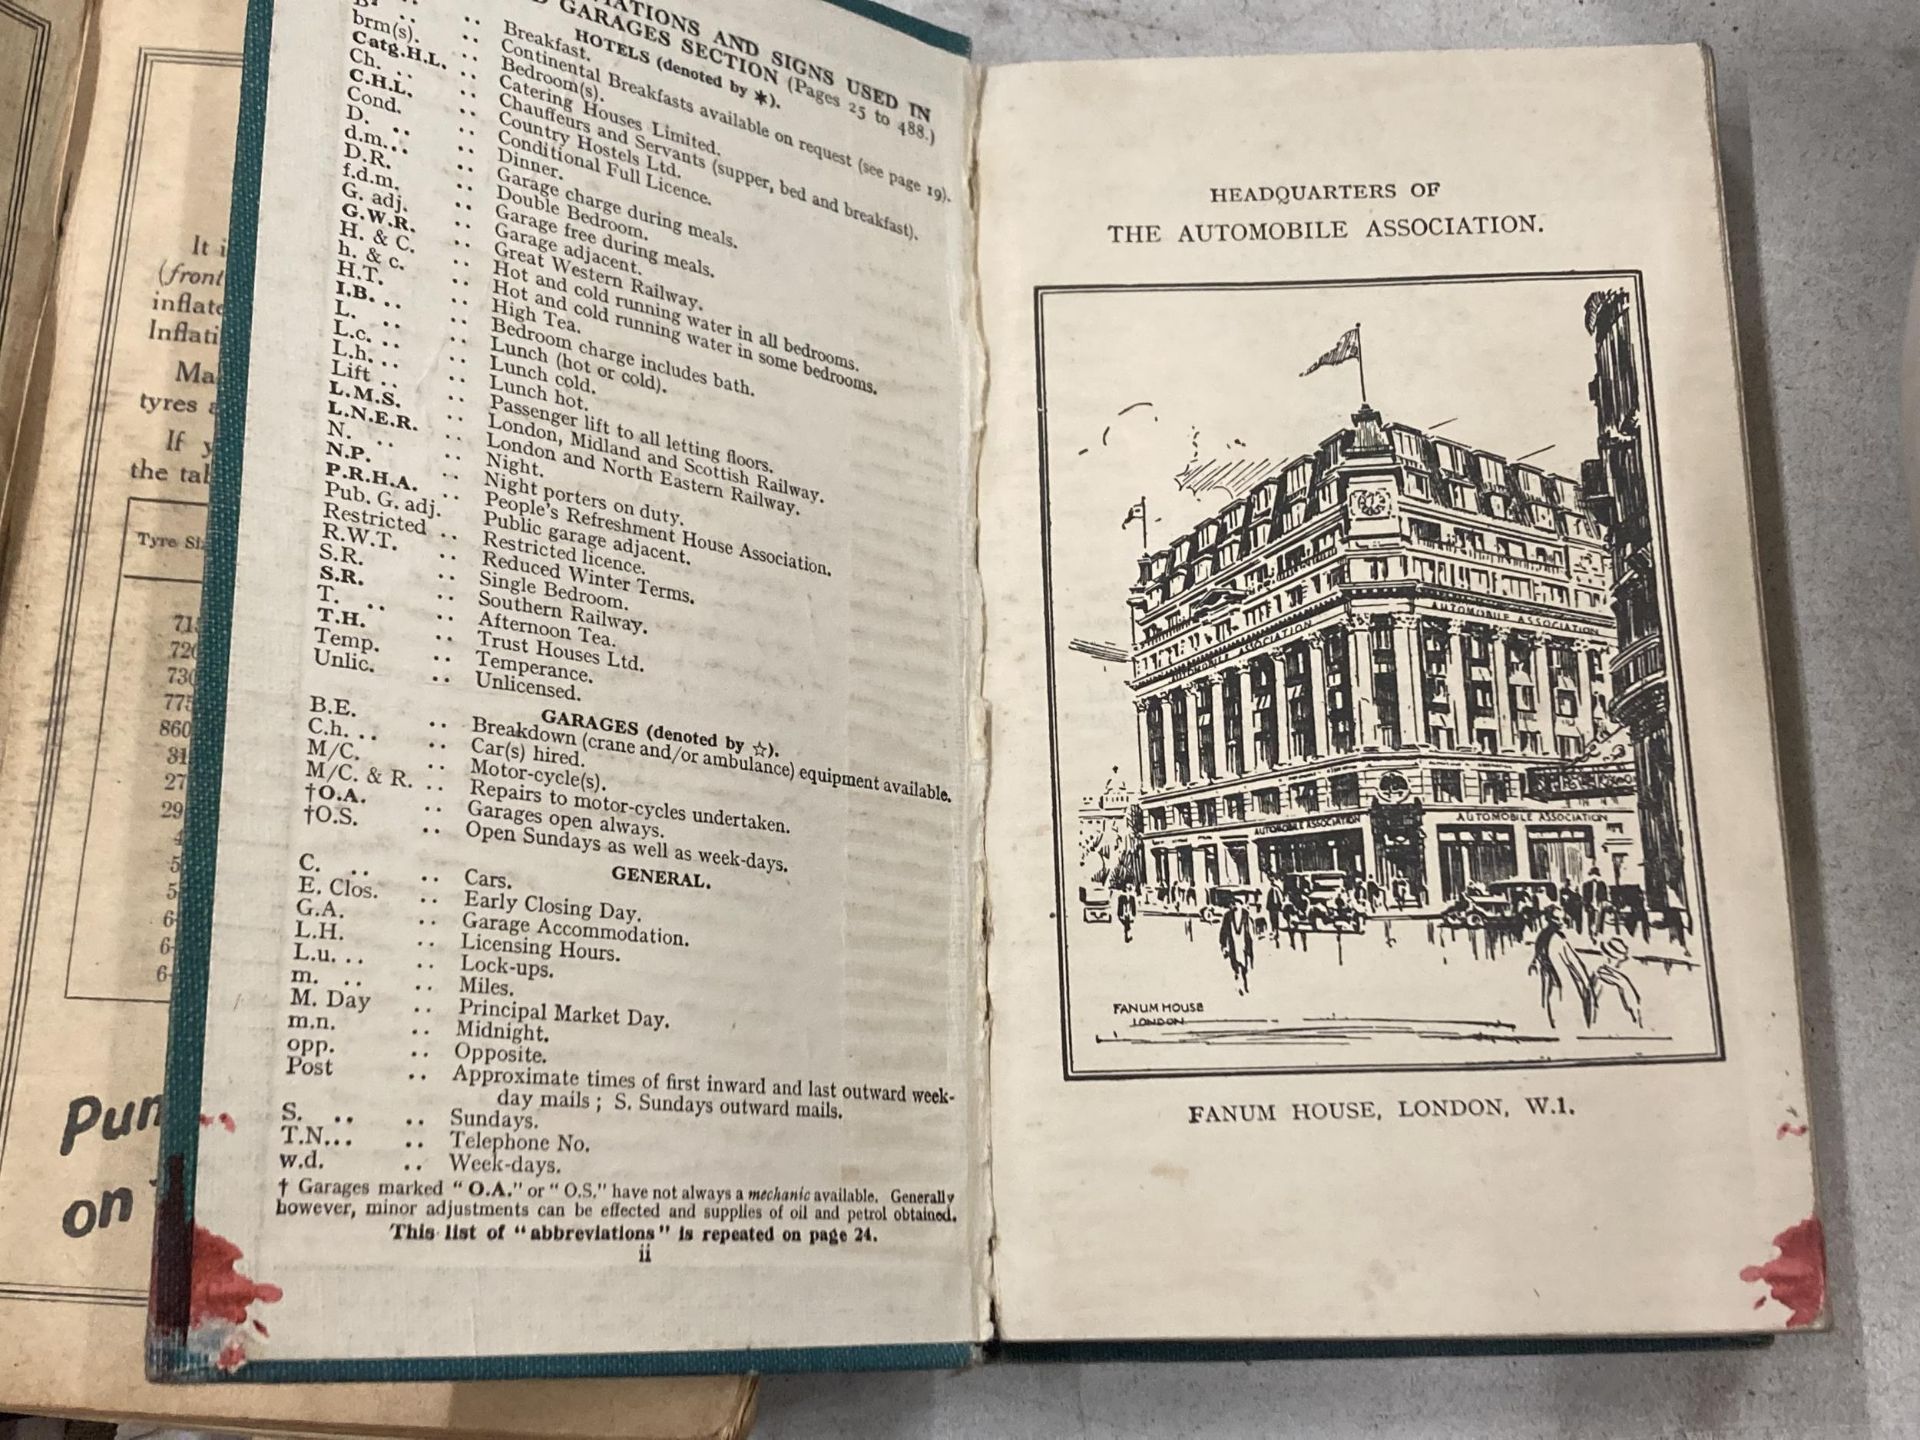 THE AA HANDBOOK 1937-38 AND A MICHELIN GUIDE 10TH EDITION 1925 - Bild 4 aus 6